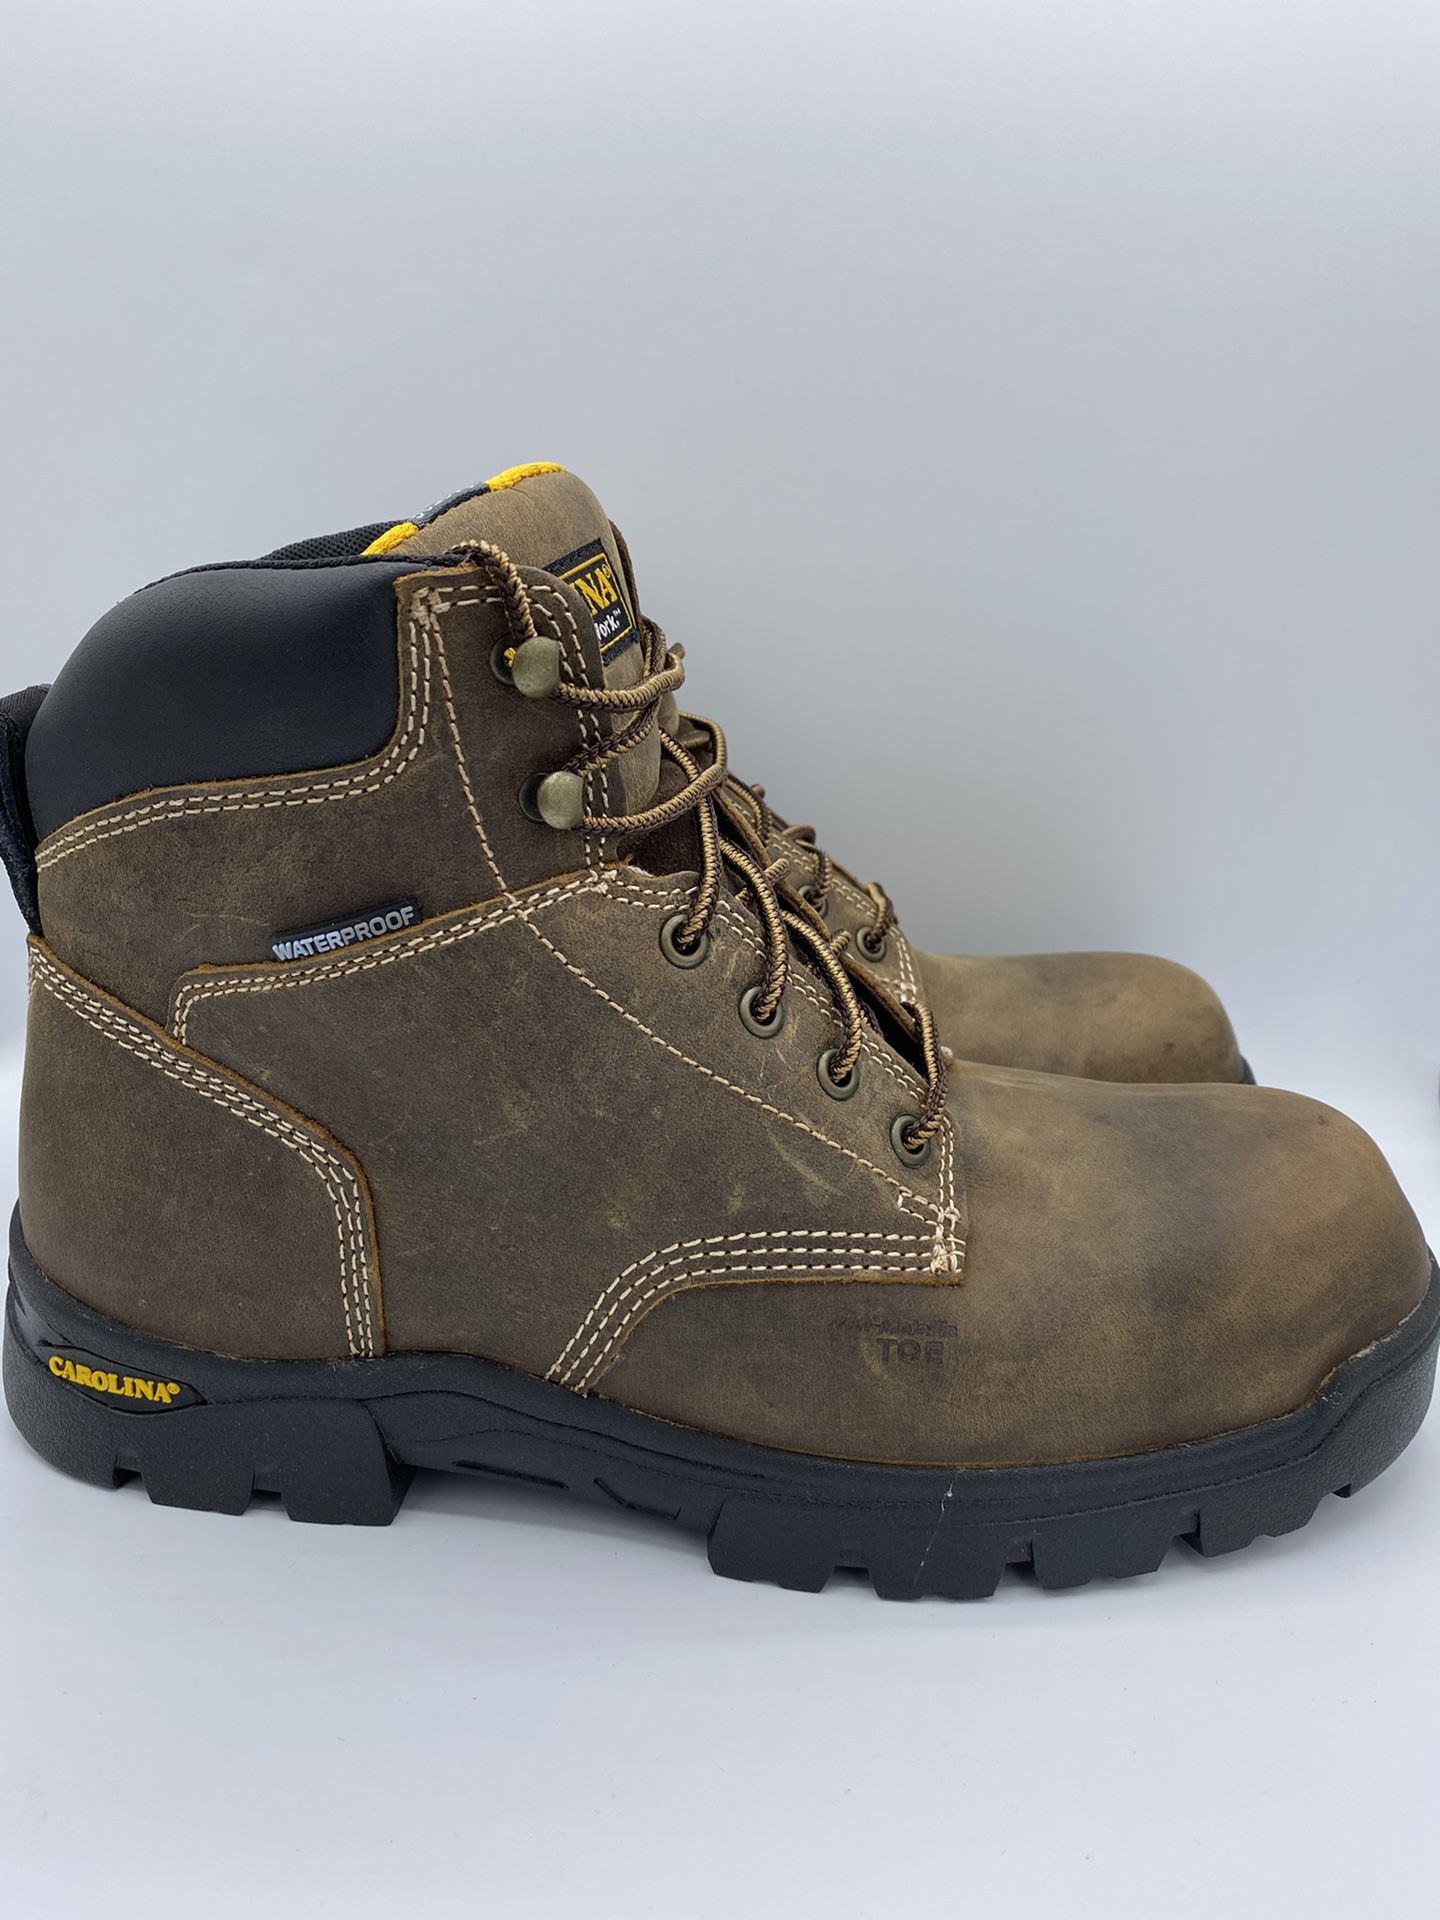 Carolina brown 6’’ composite toe work boot